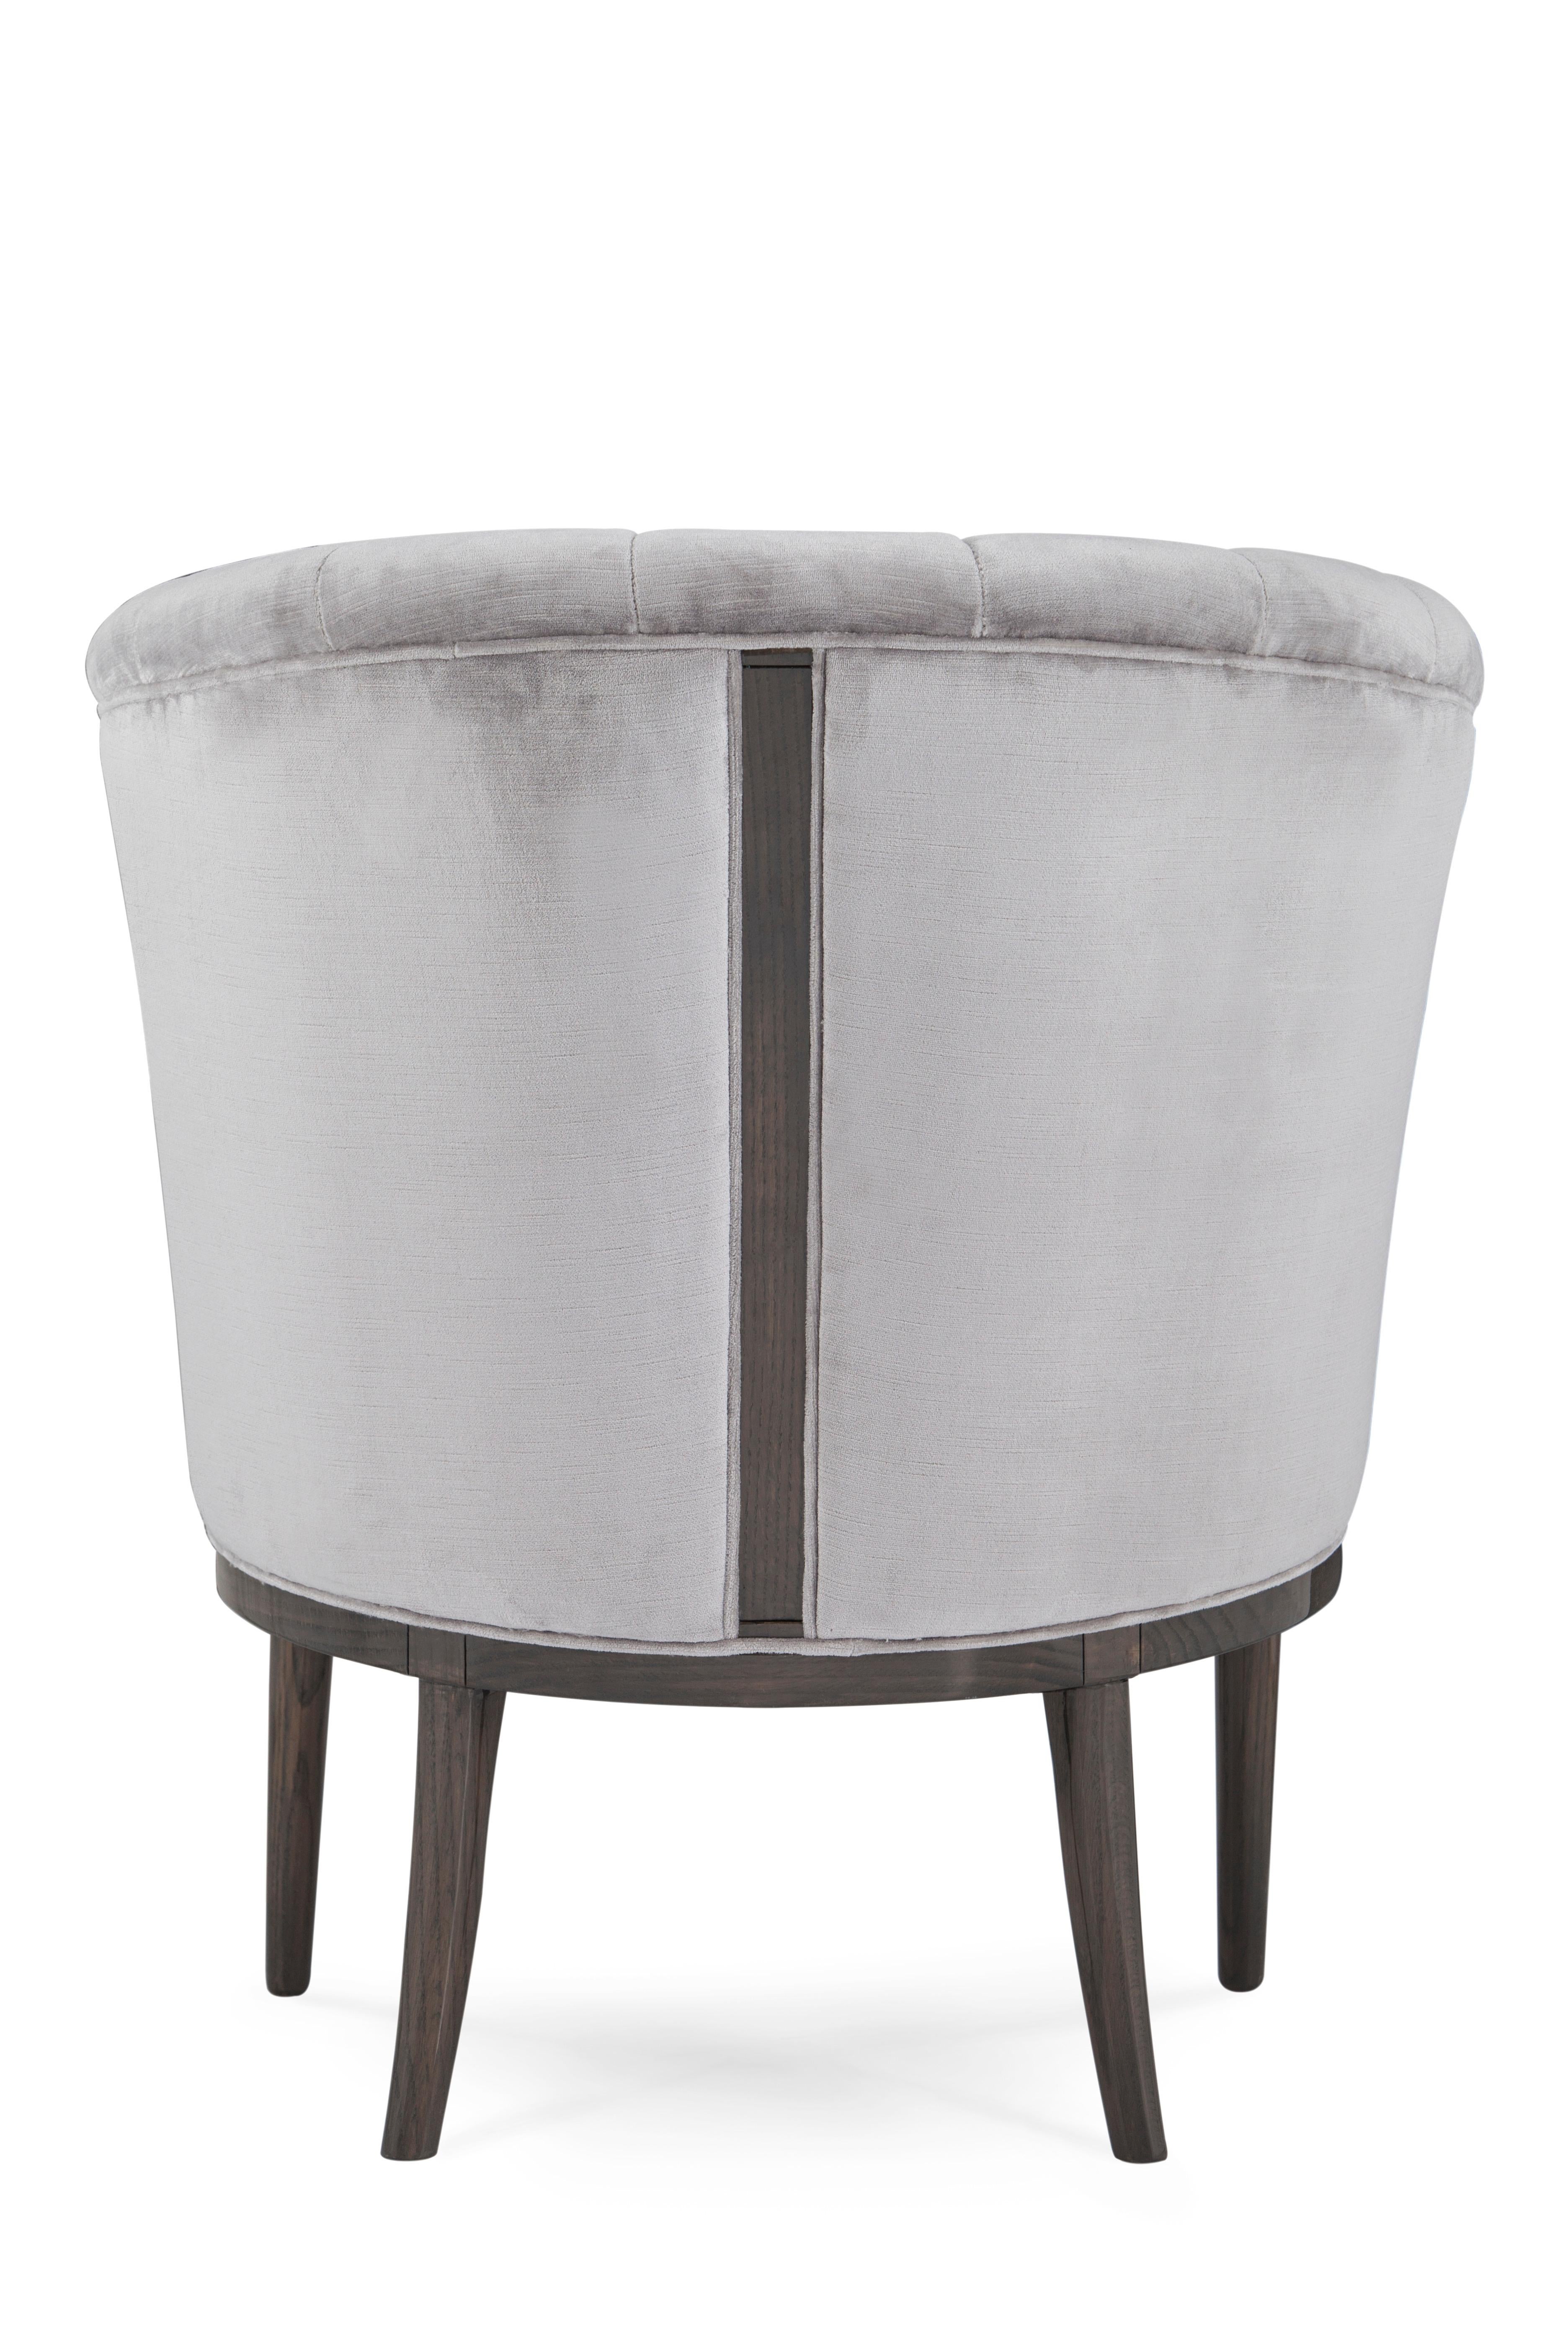 Contemporary Art Deco Lisboa Lounge Chair Grey Velvet Handmade in Portugal by Greenapple For Sale